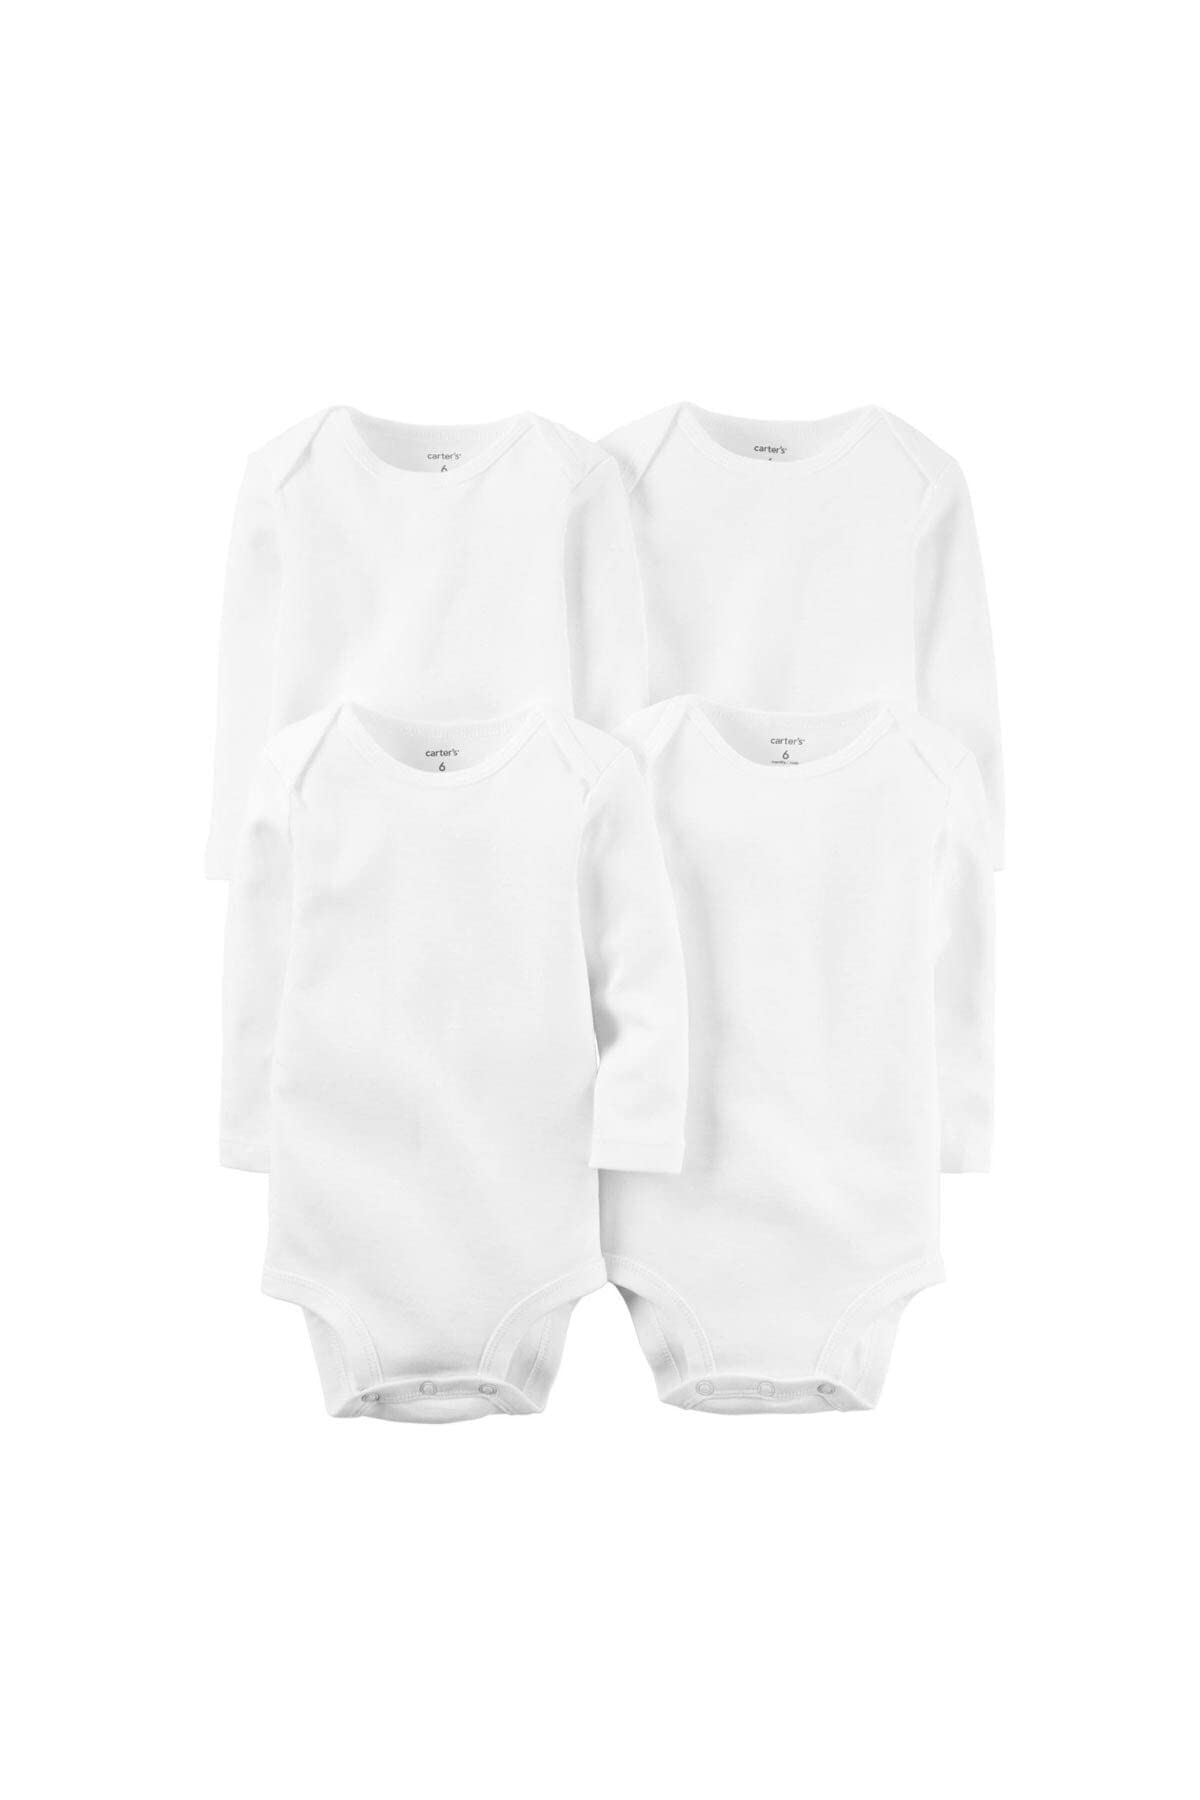 Carter's Baby 4-Pack Long Sleeve Bodysuits Newborn White